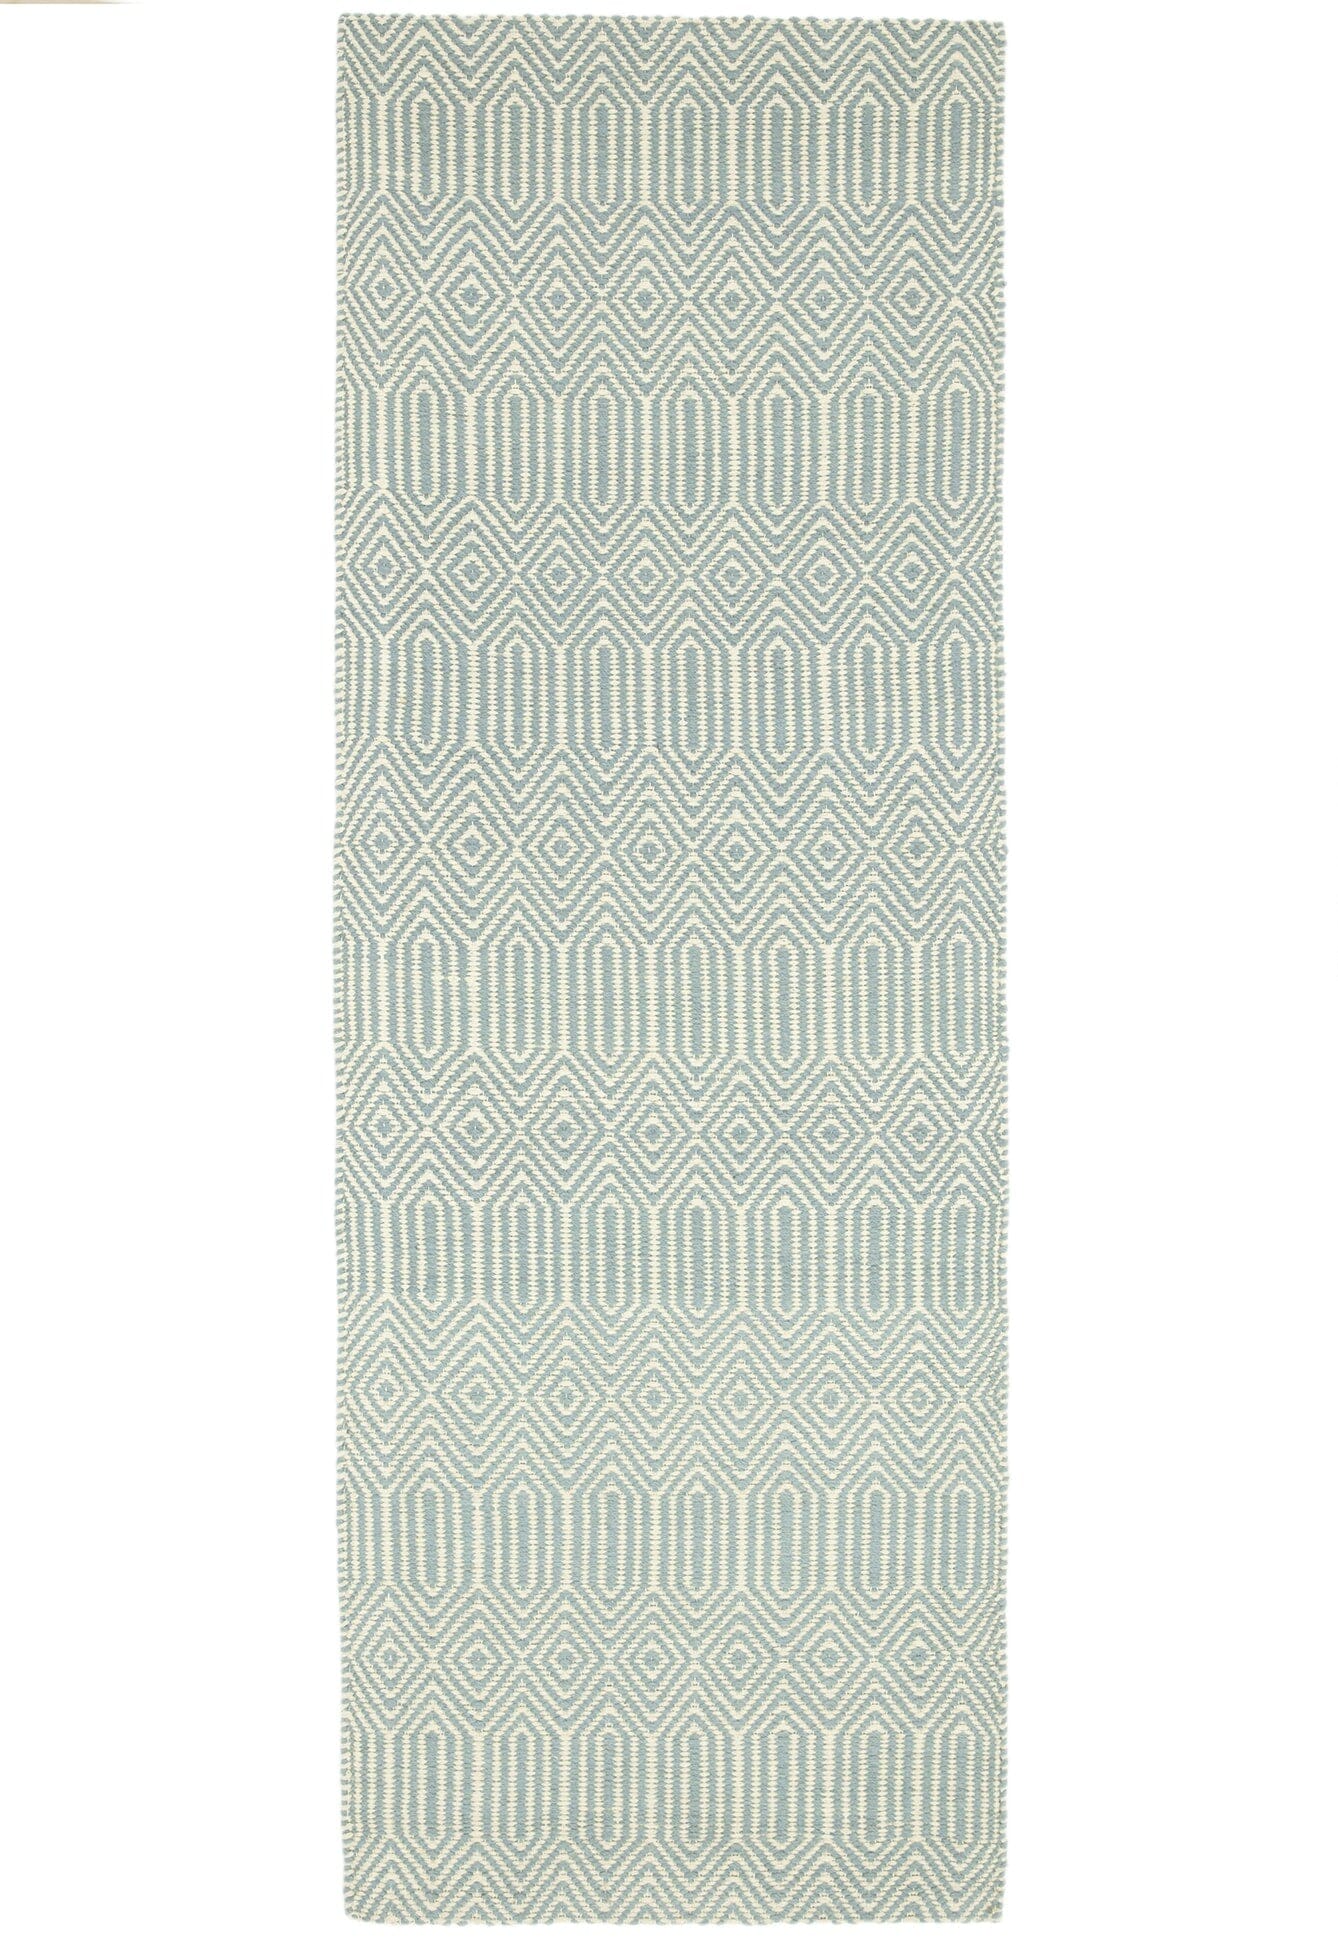  Asiatic Carpets-Asiatic Carpets Sloan Hand Woven Rug Duck Egg - 160 x 230cm-Blue 141 